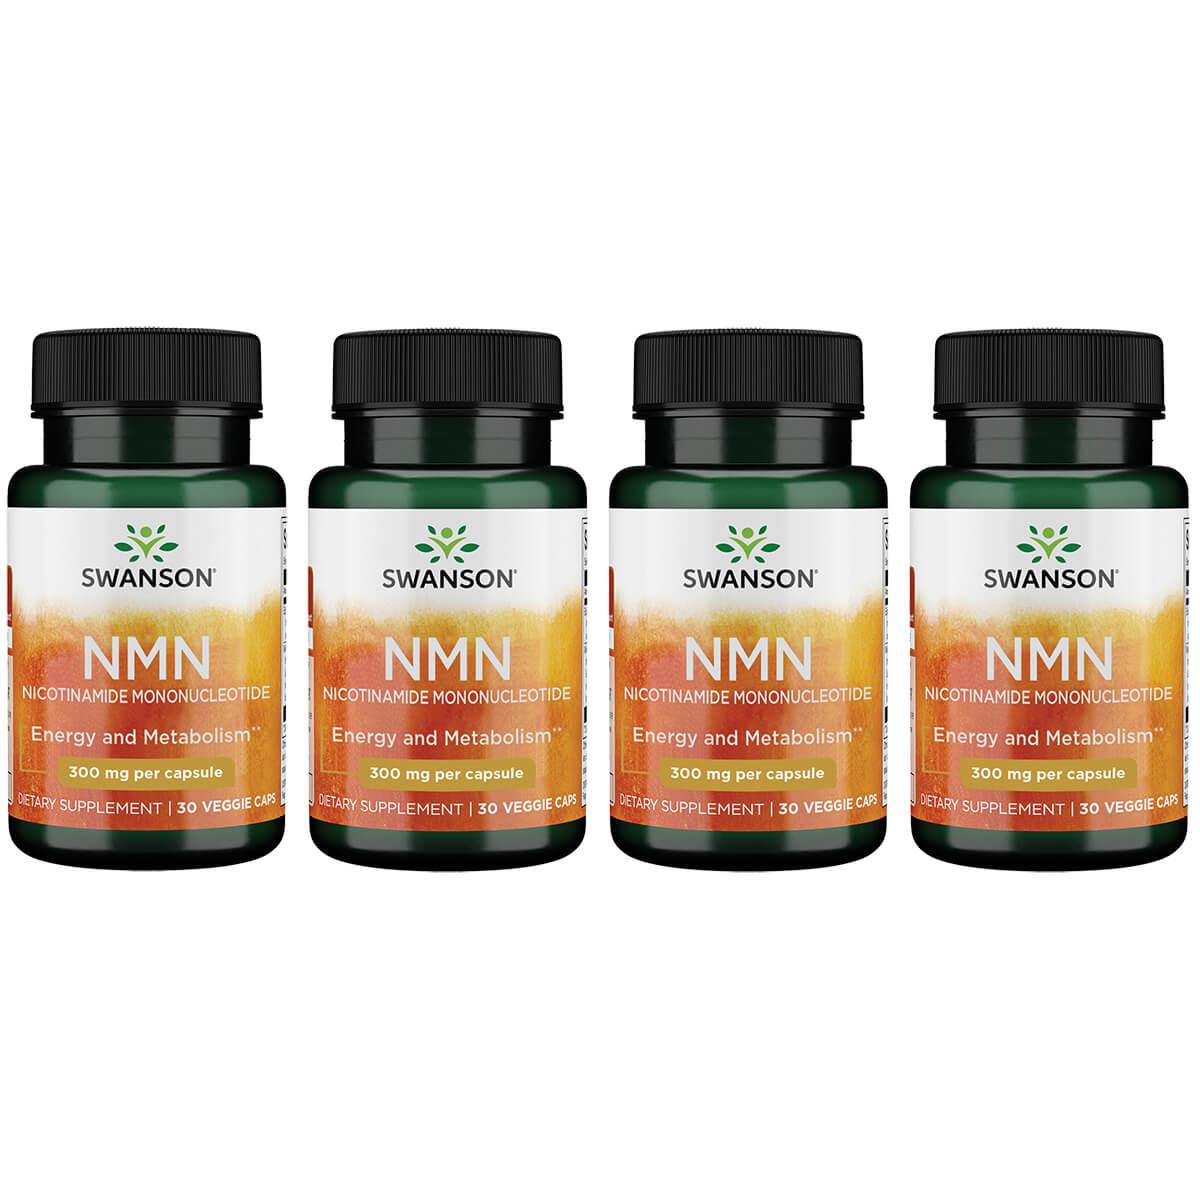 Swanson Premium Nmn Nicotinamide Mononucleotide 4 Pack Vitamin 300 mg 30 Veg Caps